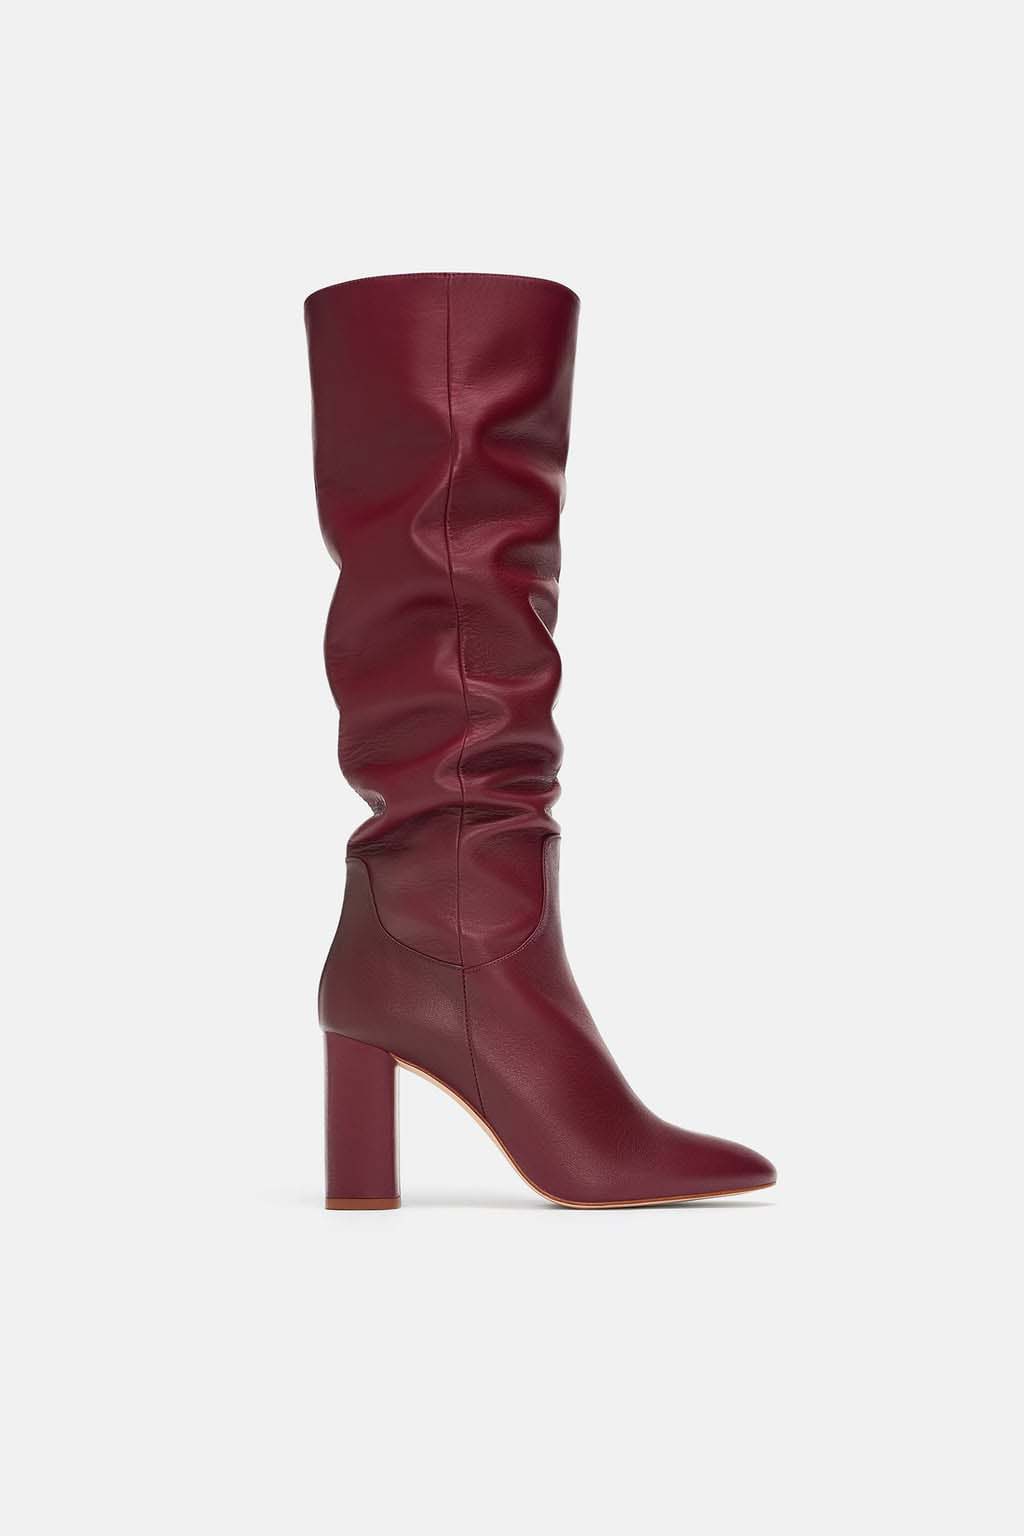 Zara red boots